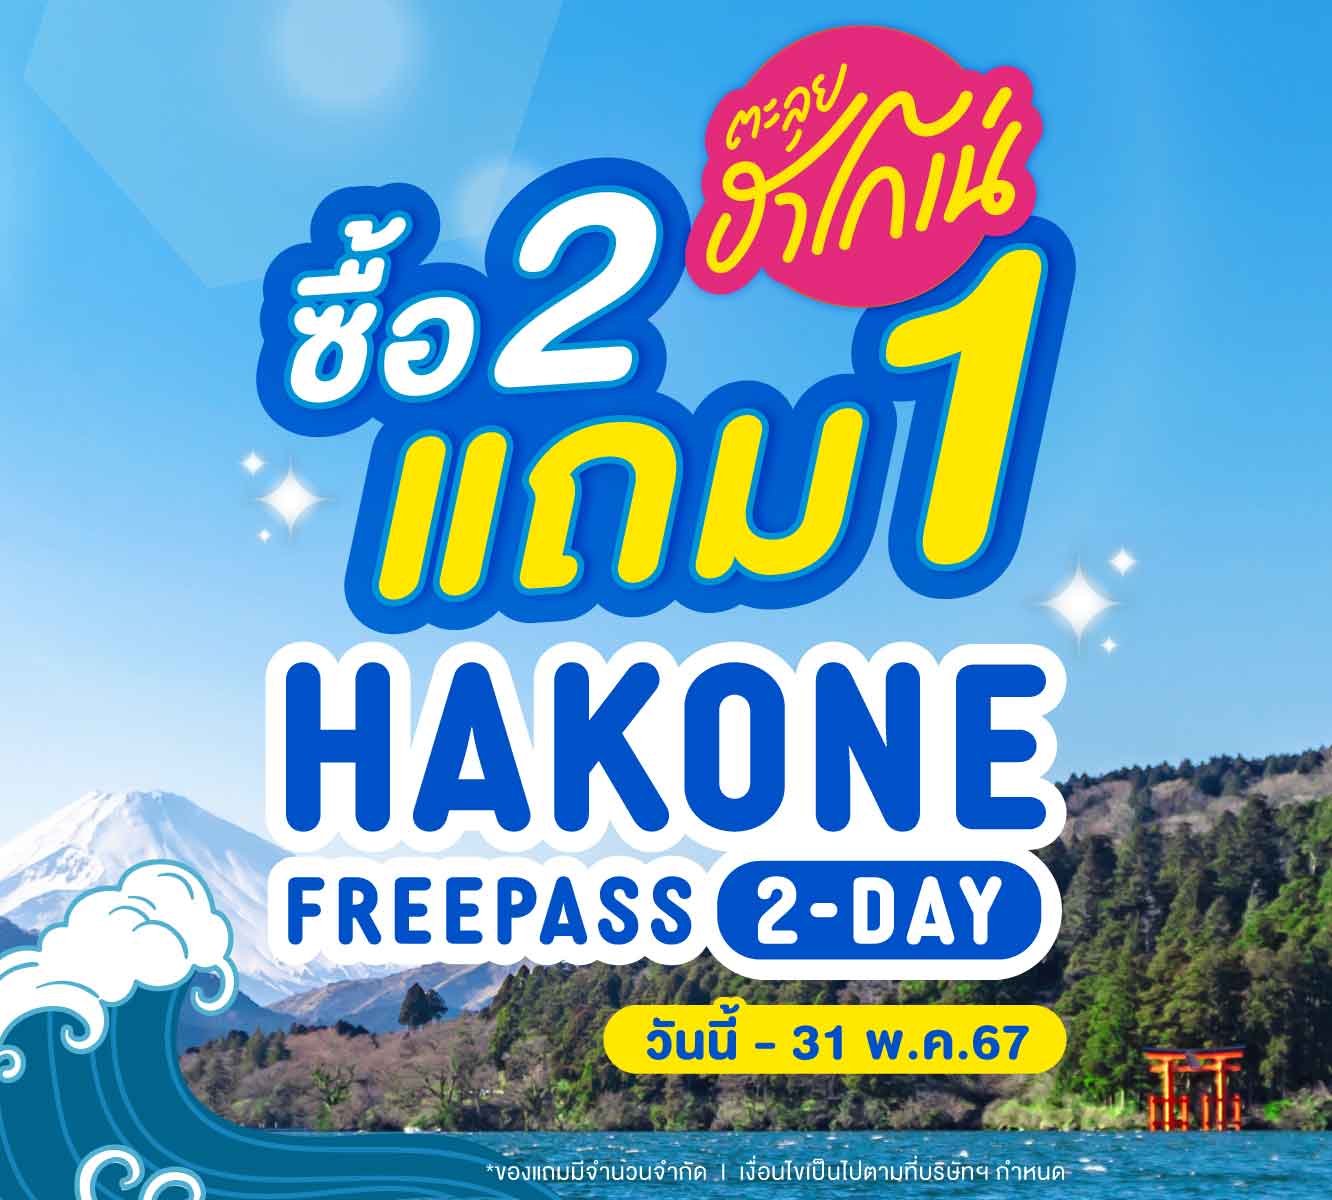 Buy2Get1Free Hakone Freepass 2-Day